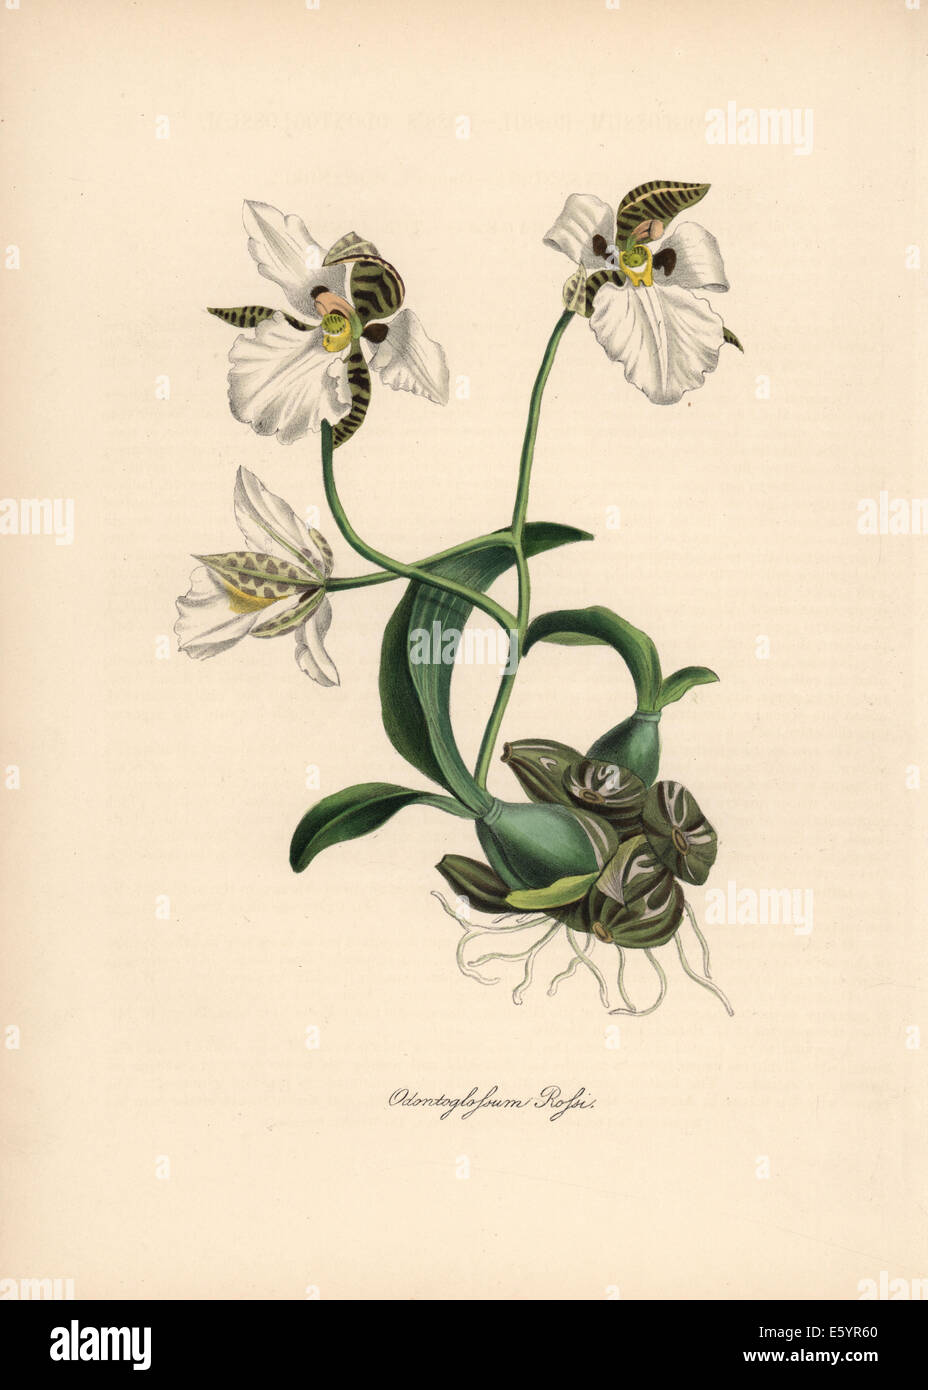 Ross's odontoglossum orchid, Odontoglossum rossi. Stock Photo